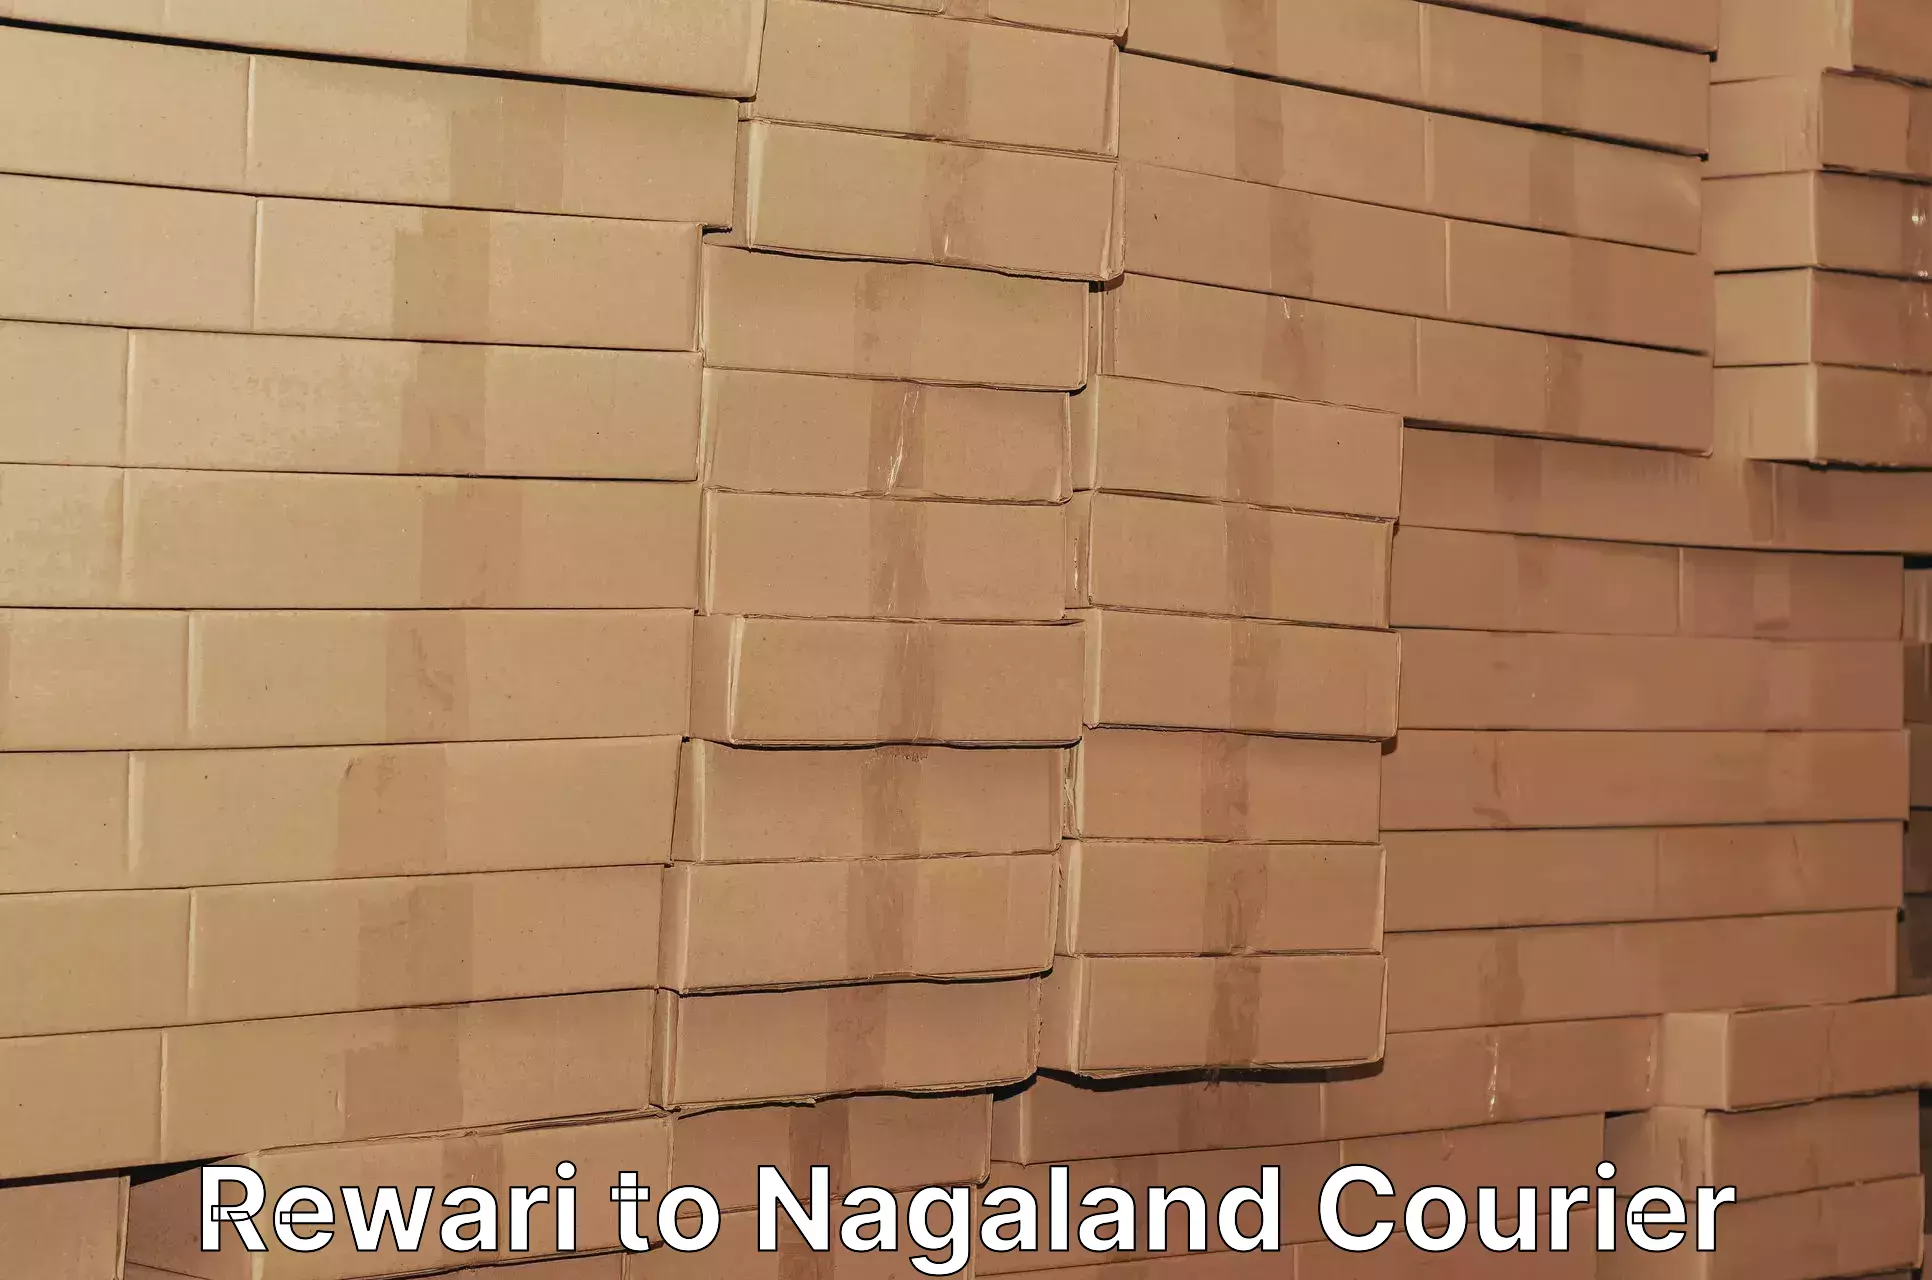 Nationwide parcel services Rewari to Nagaland